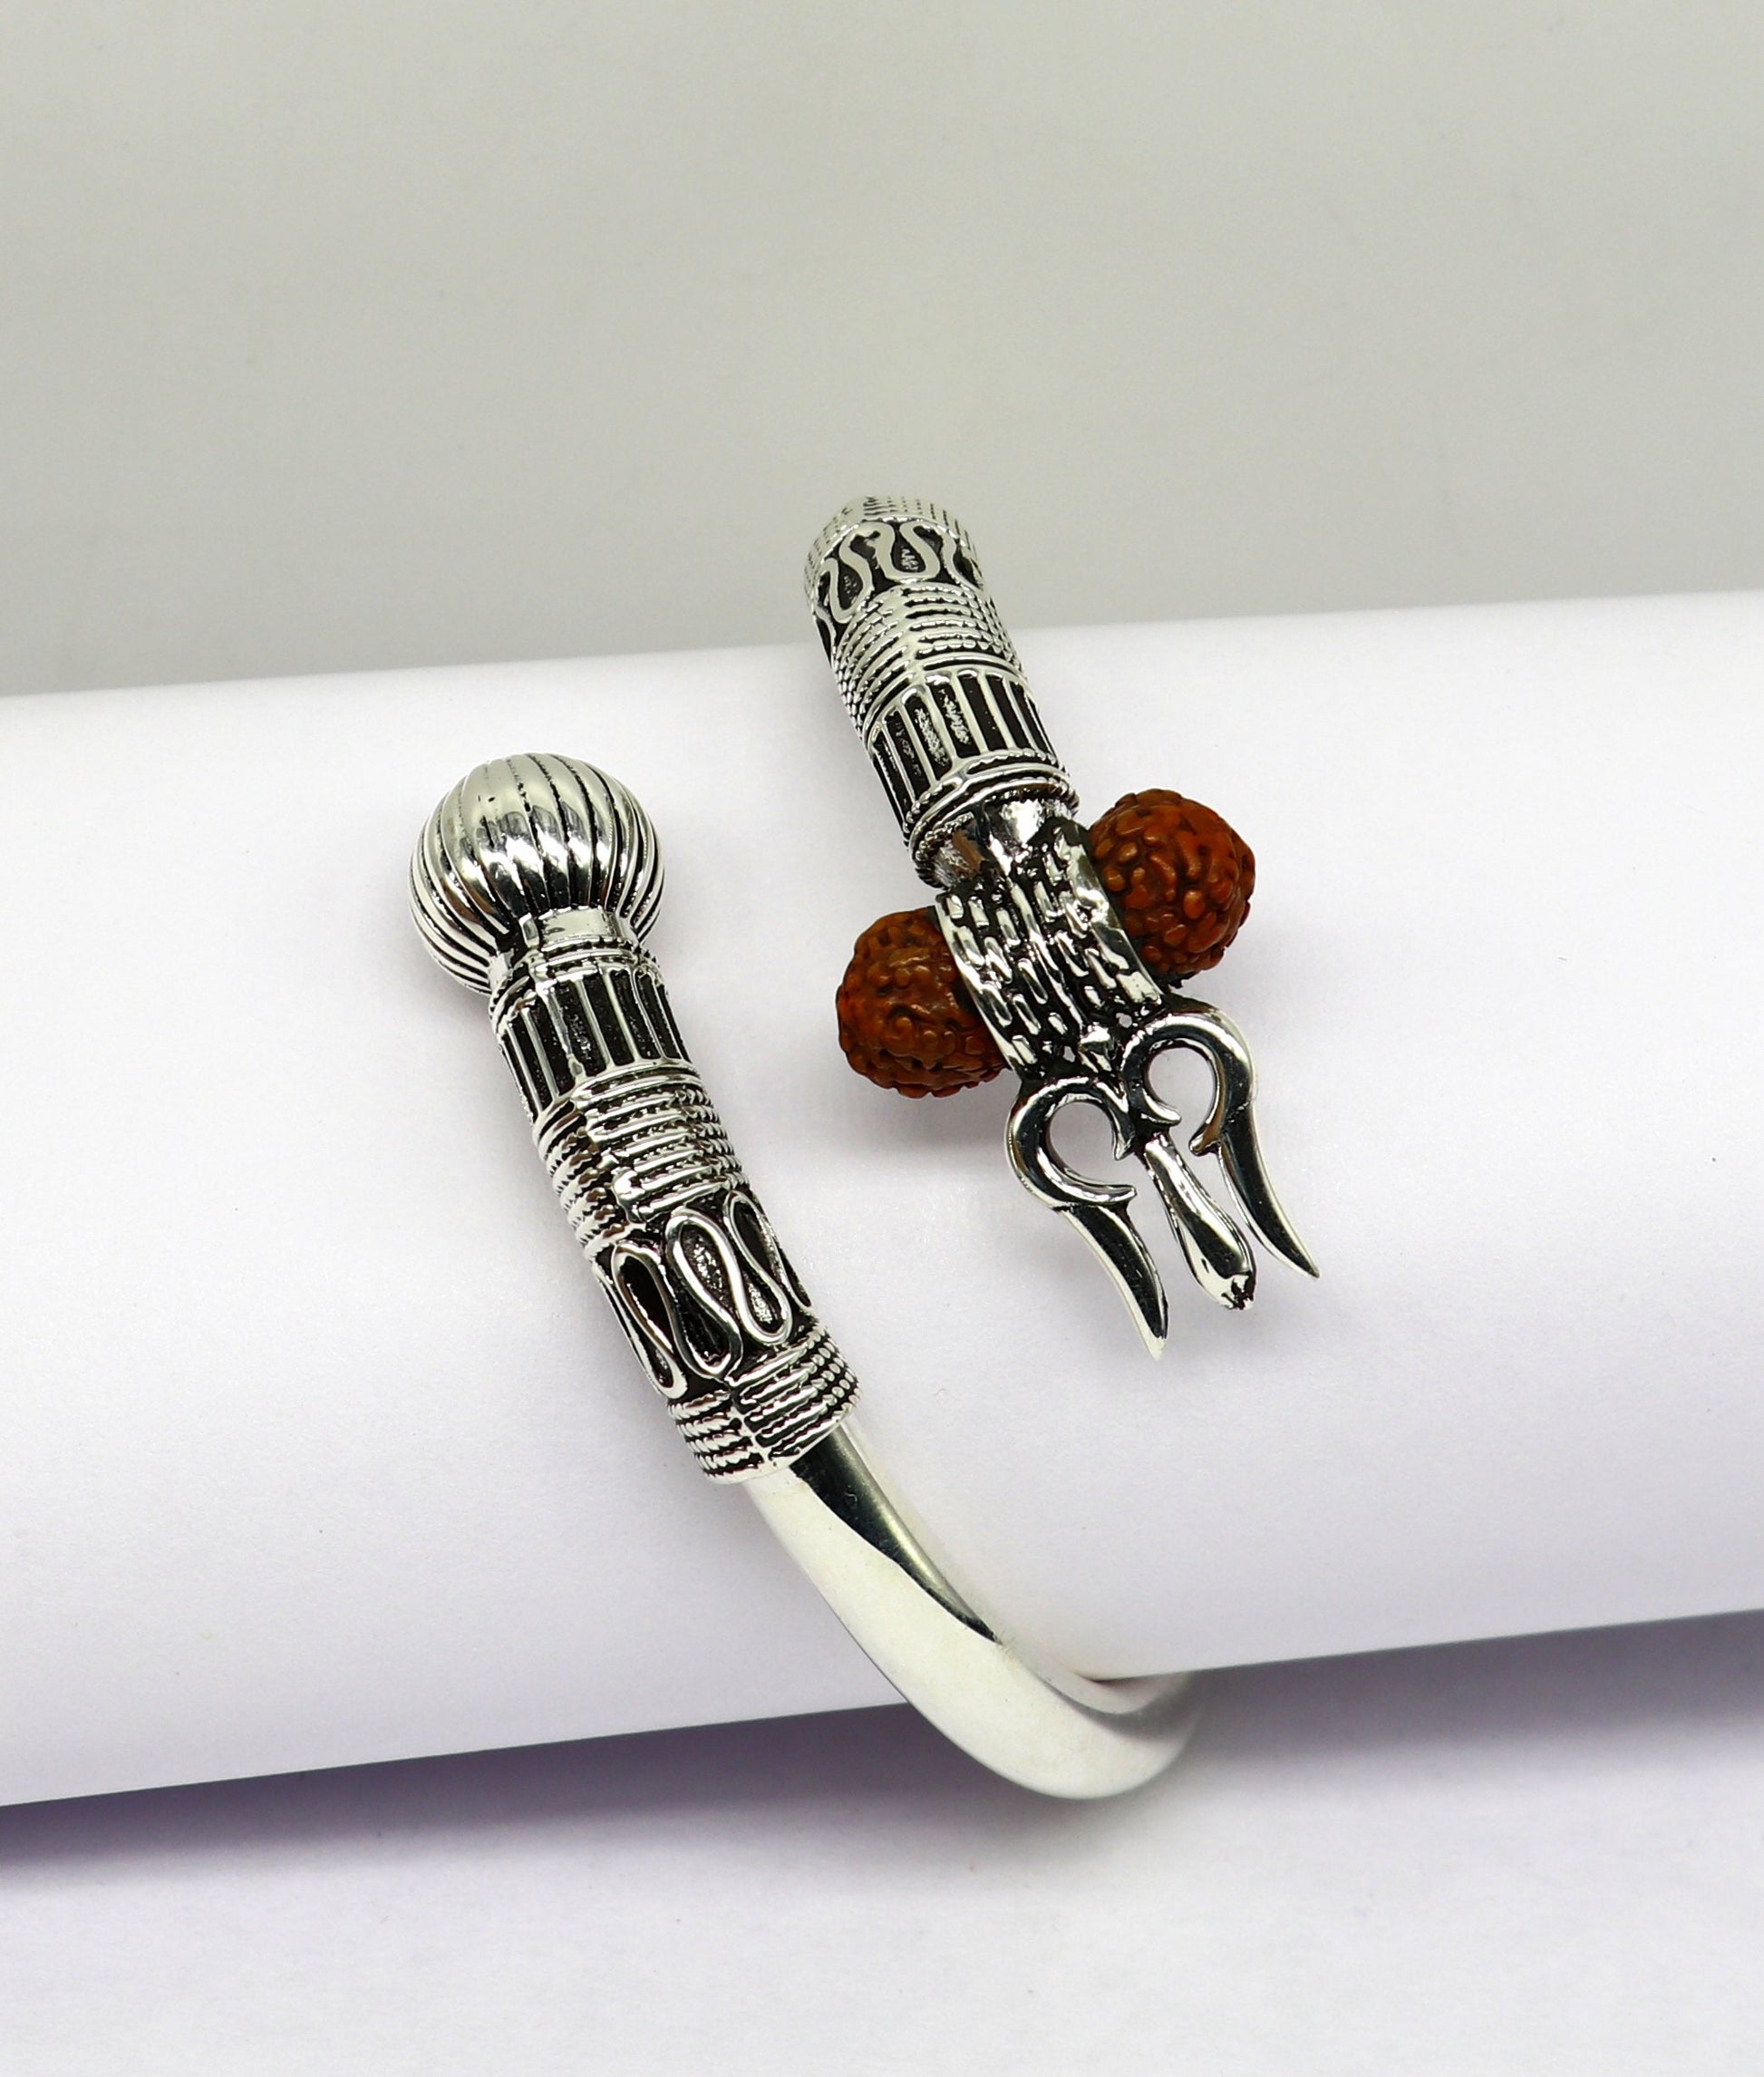 Devine 925 sterling silver handmade lord Shiva trident Trishul bangle bracelet kada, best gift for girl's or boy's stunning bangle nssk419 - TRIBAL ORNAMENTS